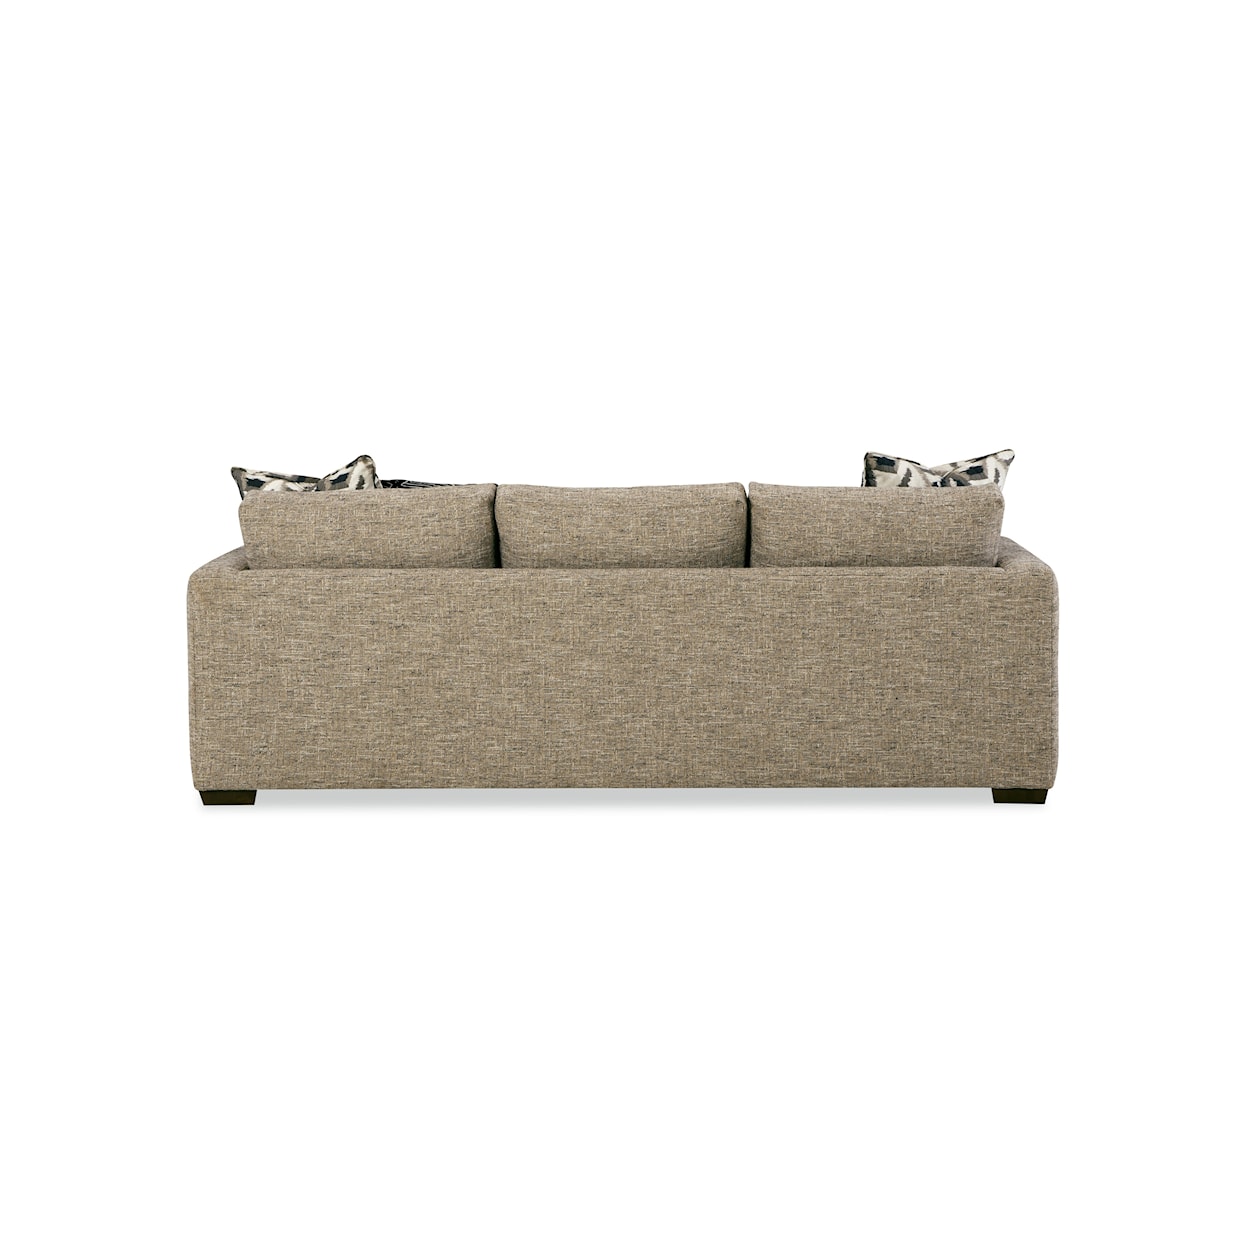 Craftmaster Modern Elements Bench Cushion Sofa